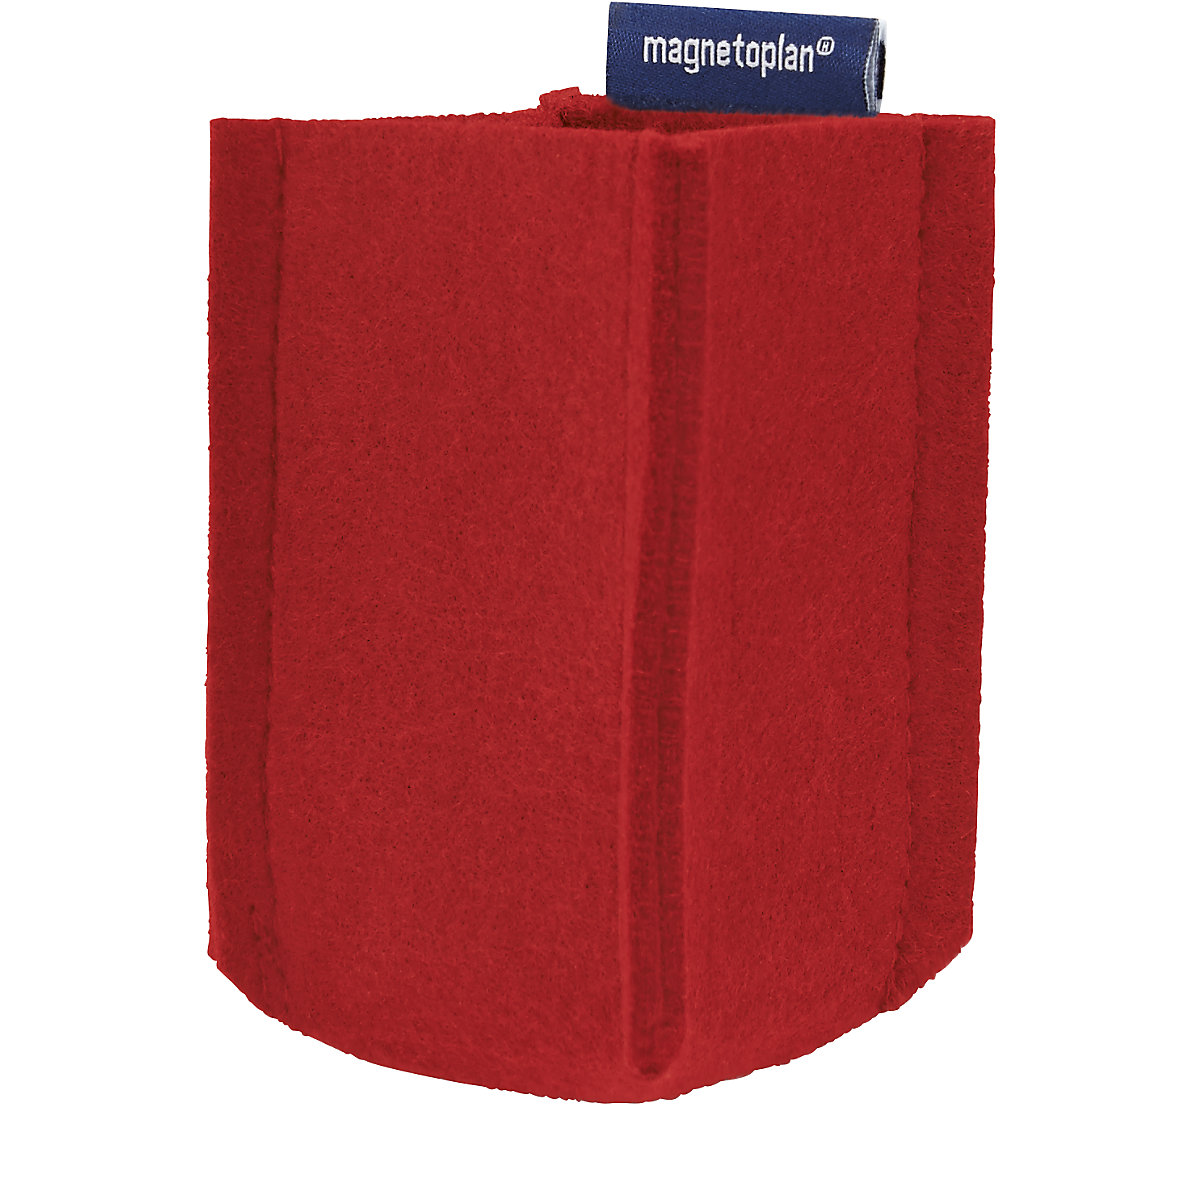 Zásobník na písacie potreby magnetoTray – magnetoplan (Zobrazenie produktu 15)-14